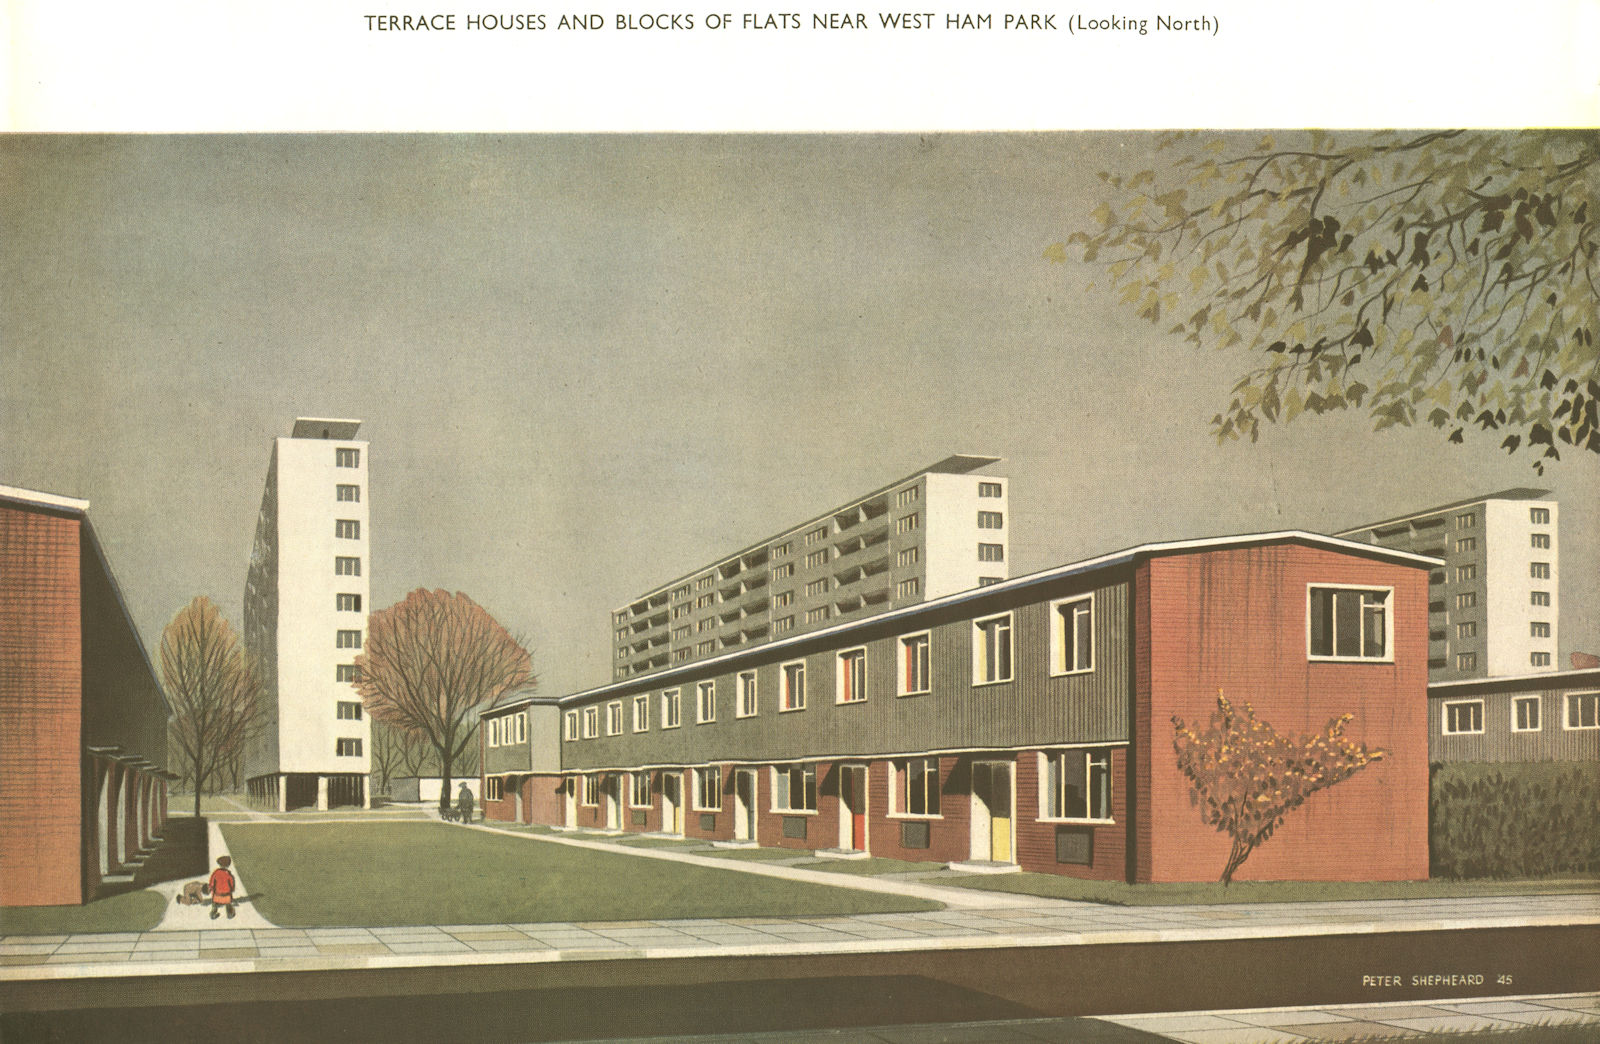 WEST HAM PARK. Proposed Terrace Houses & Blocks of flats. ABERCROMBIE 1944